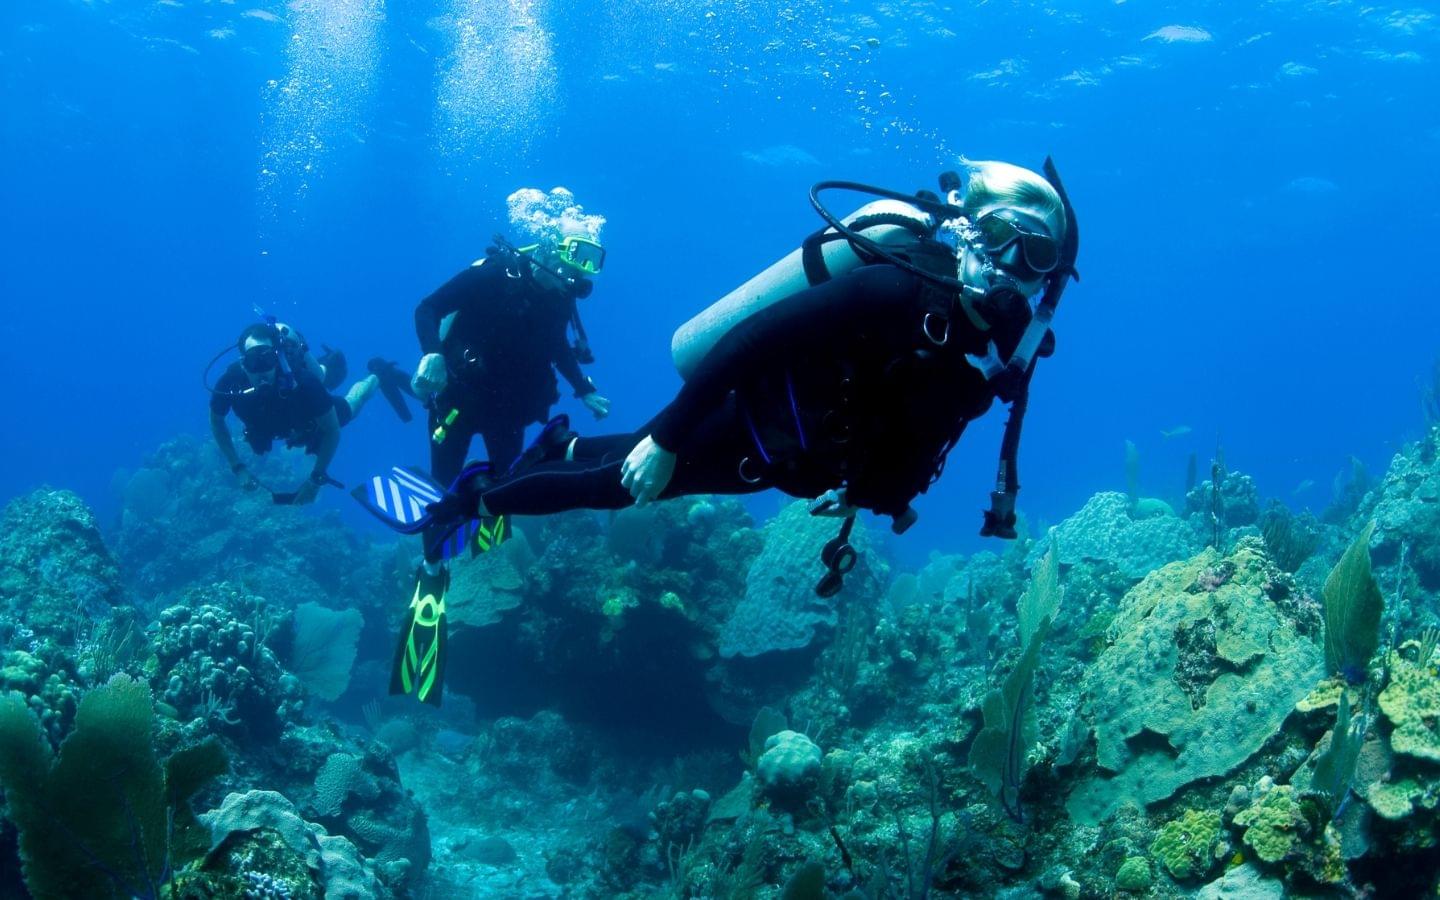 How to plan a stress-free scuba diving trip